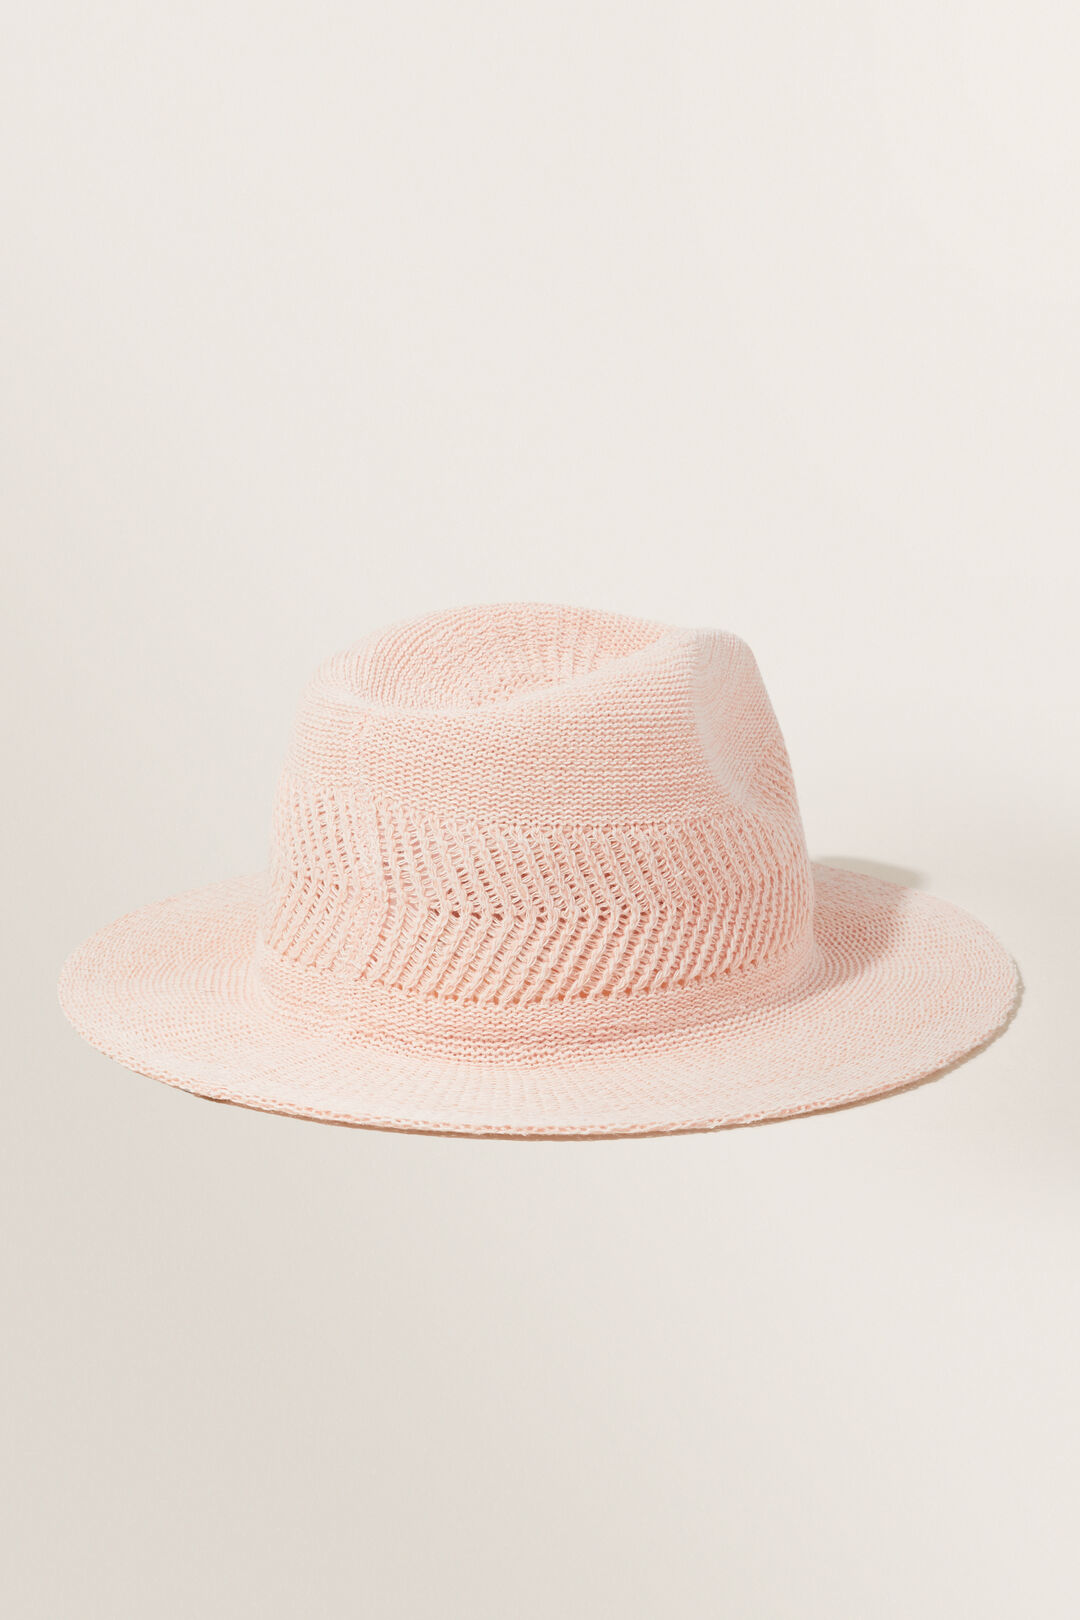 Staple Panama Hat  Pale Blossom  hi-res